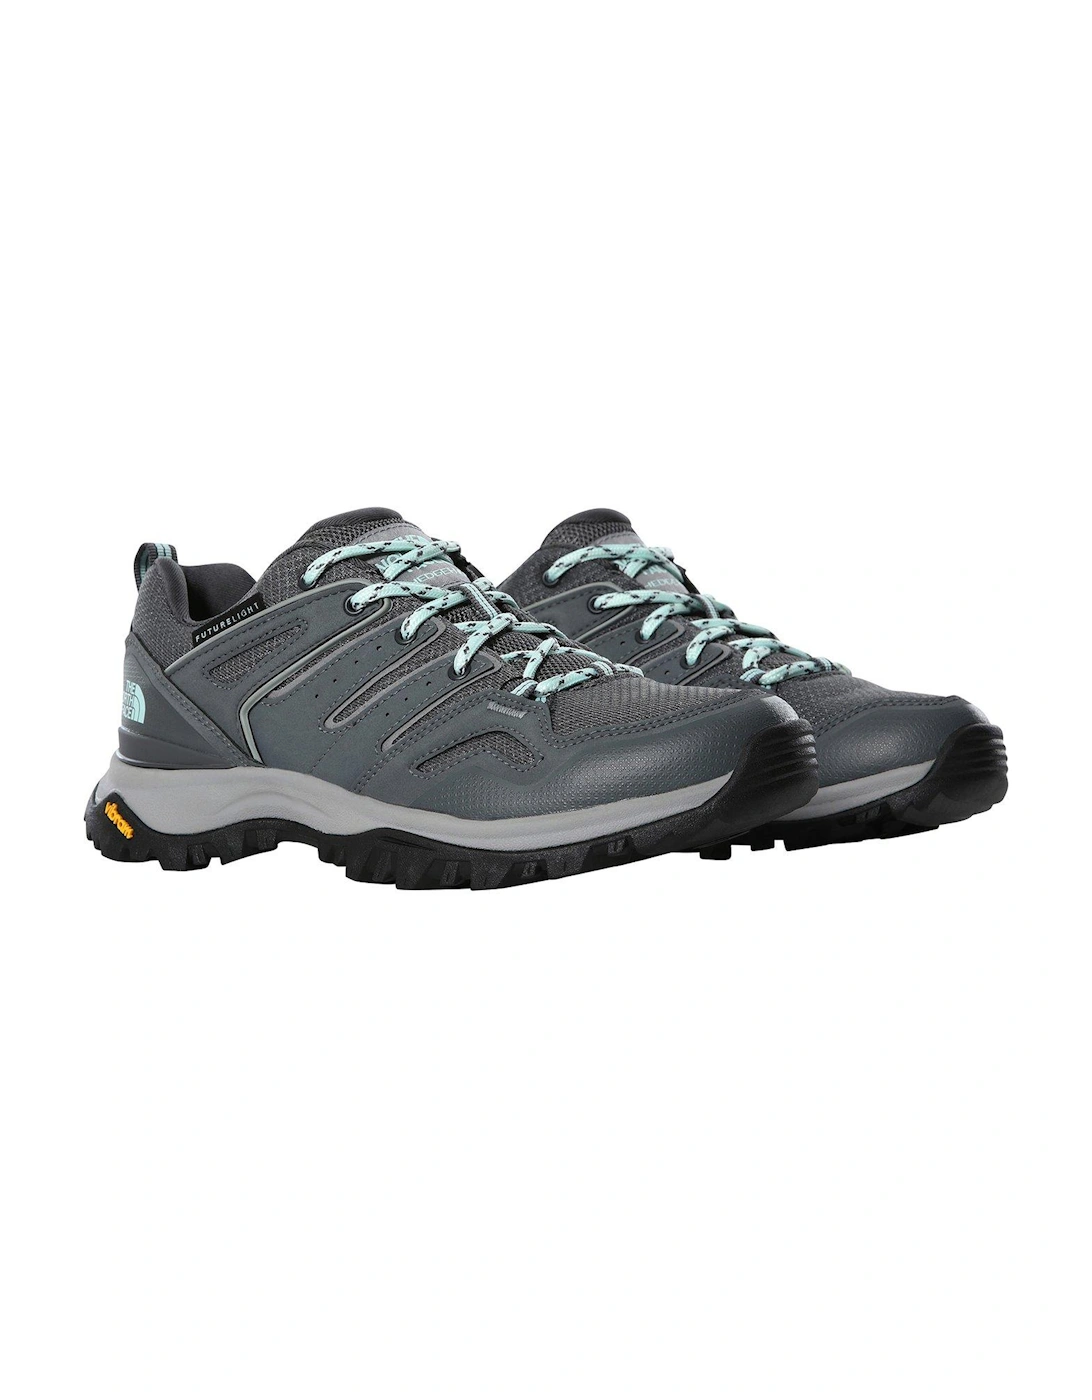 Women's Hedgehog Futurelight Hiking Shoes - Grey